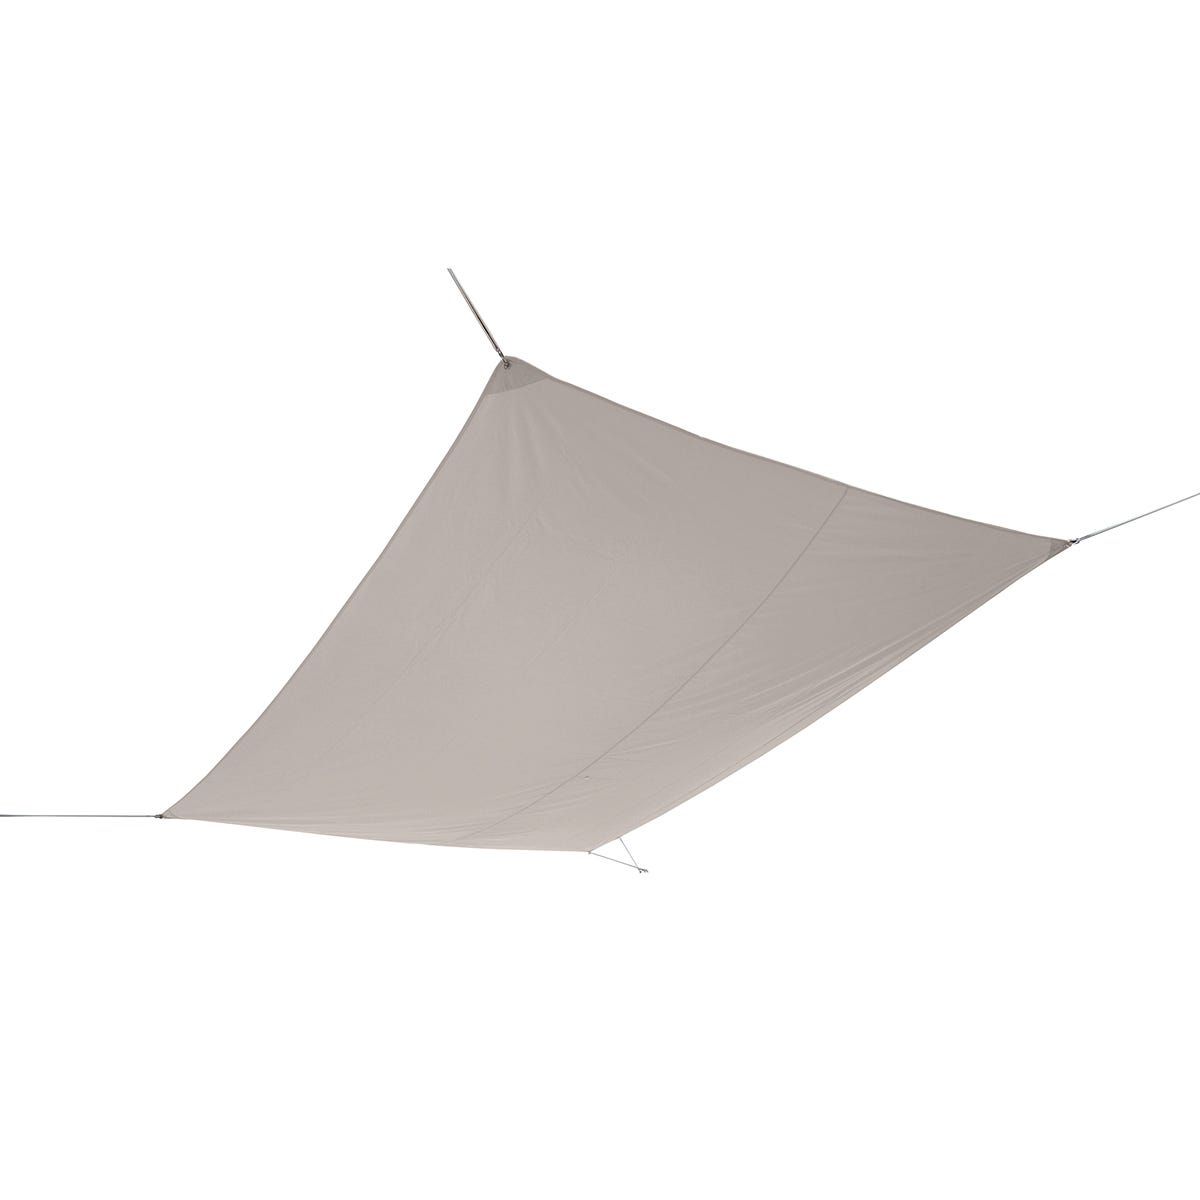 Vela ombreggiante - 550x550cm - Grigio argento - Quadrato - Tuindeco